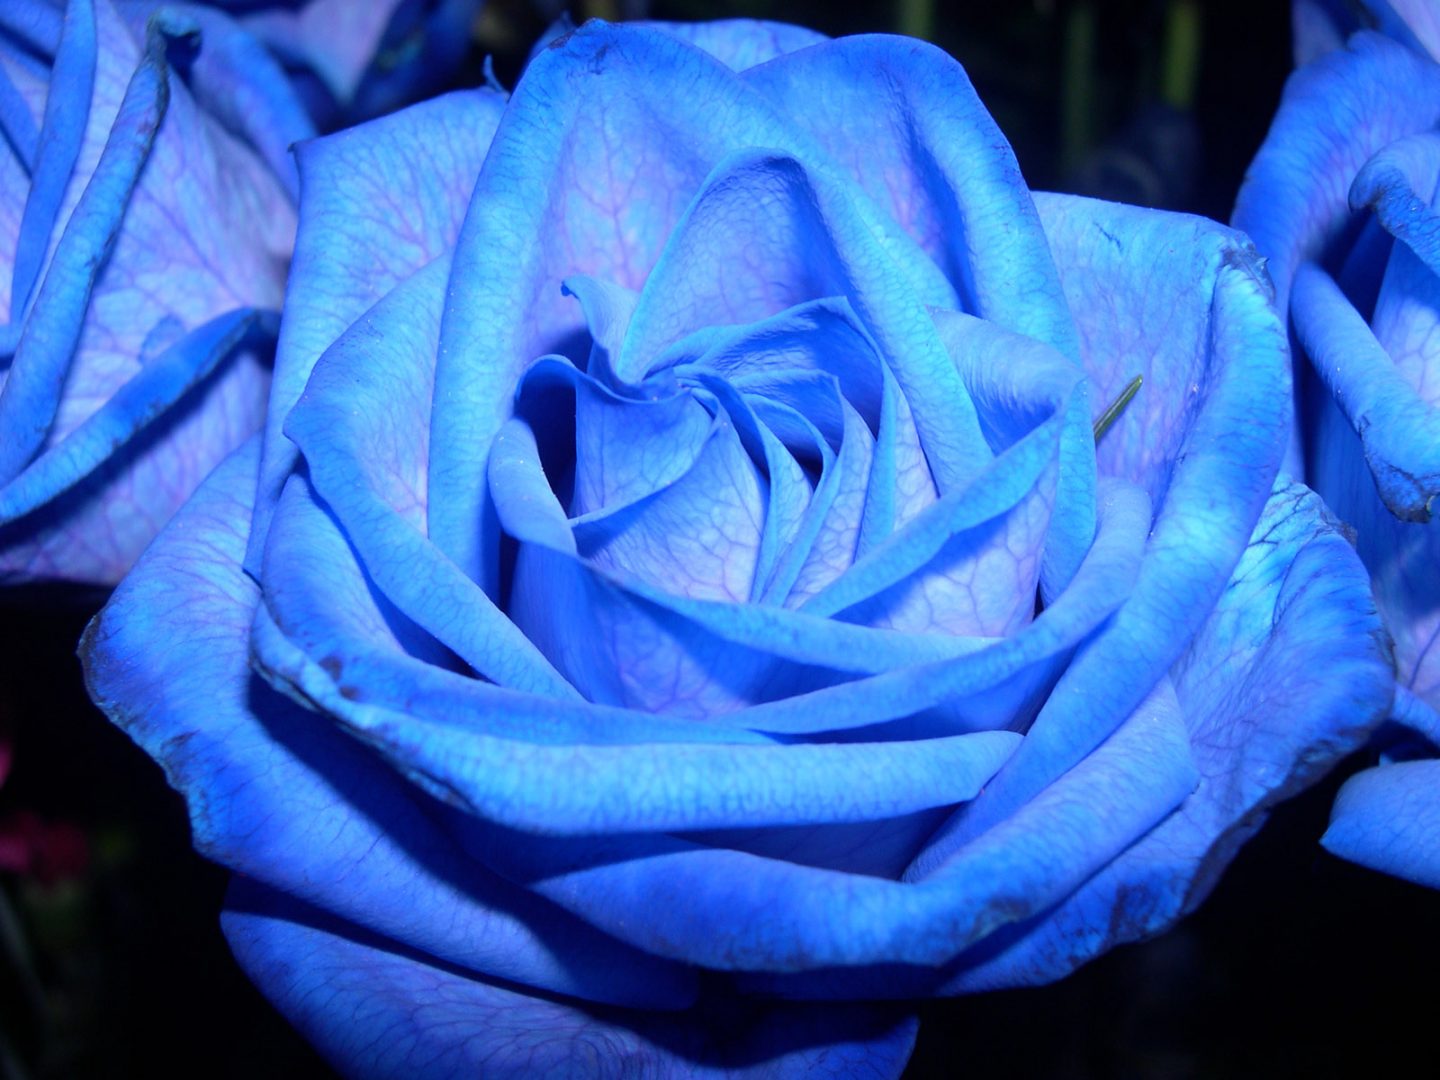 Lenguaje de las rosas azules